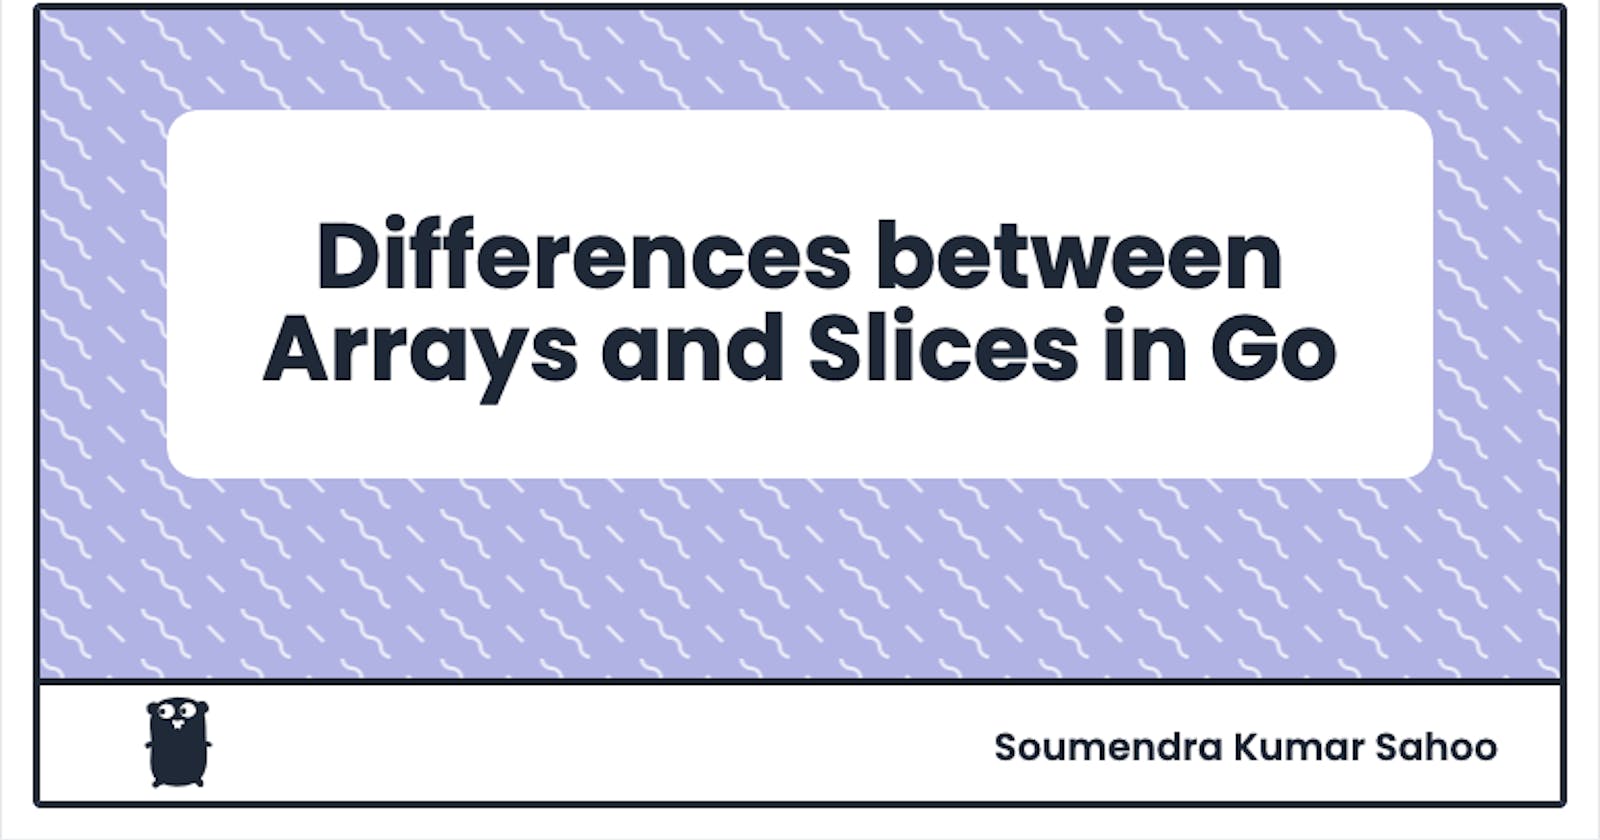 Go: Arrays vs Slices